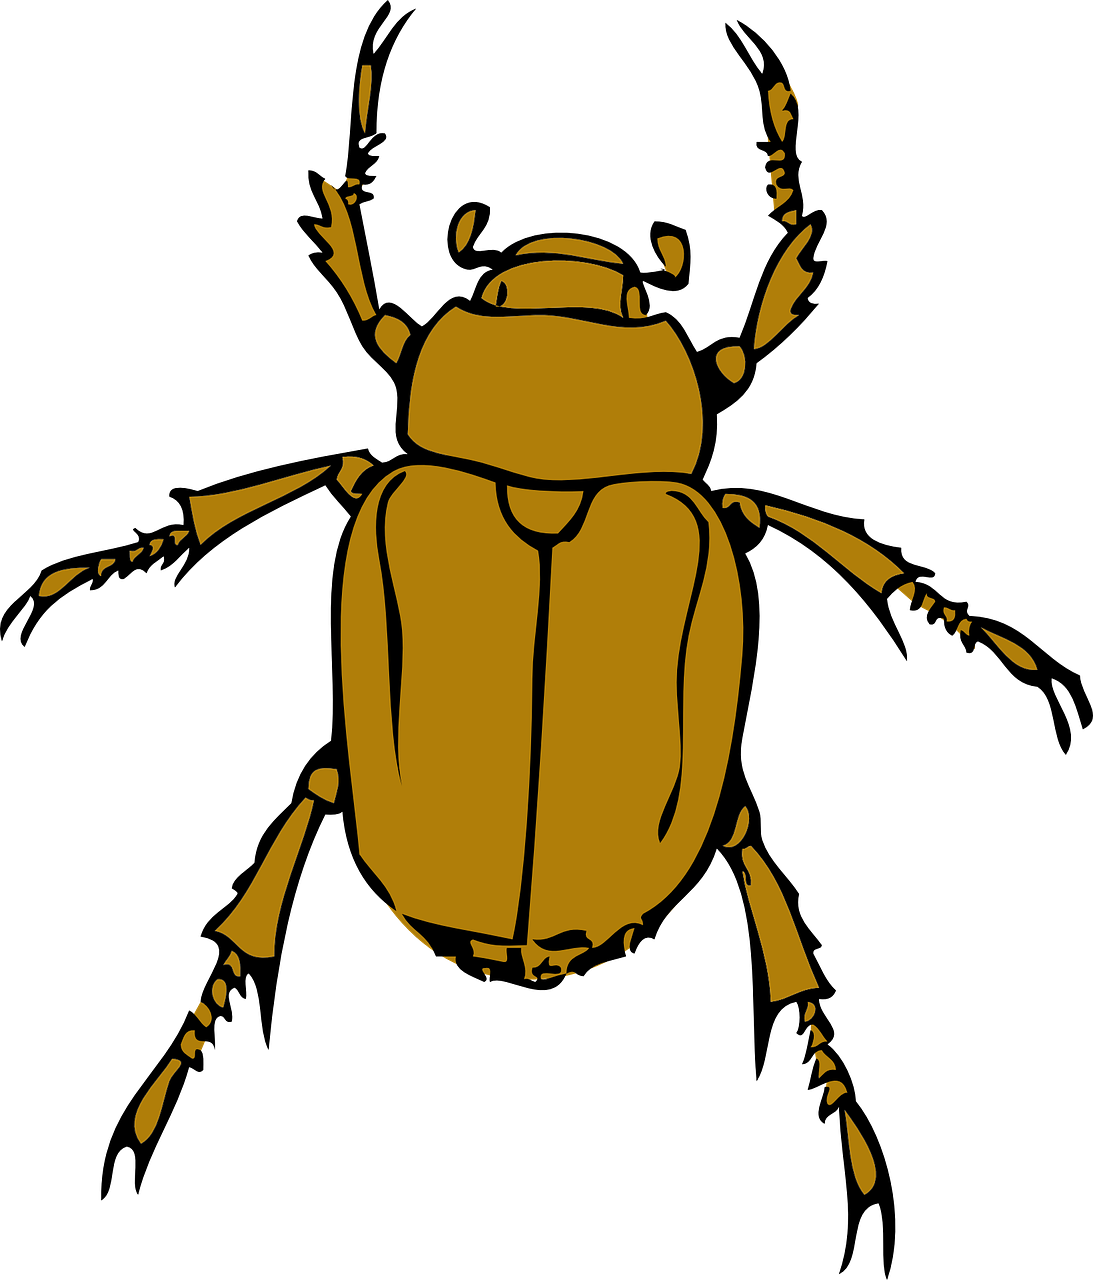 Beetle Activity image